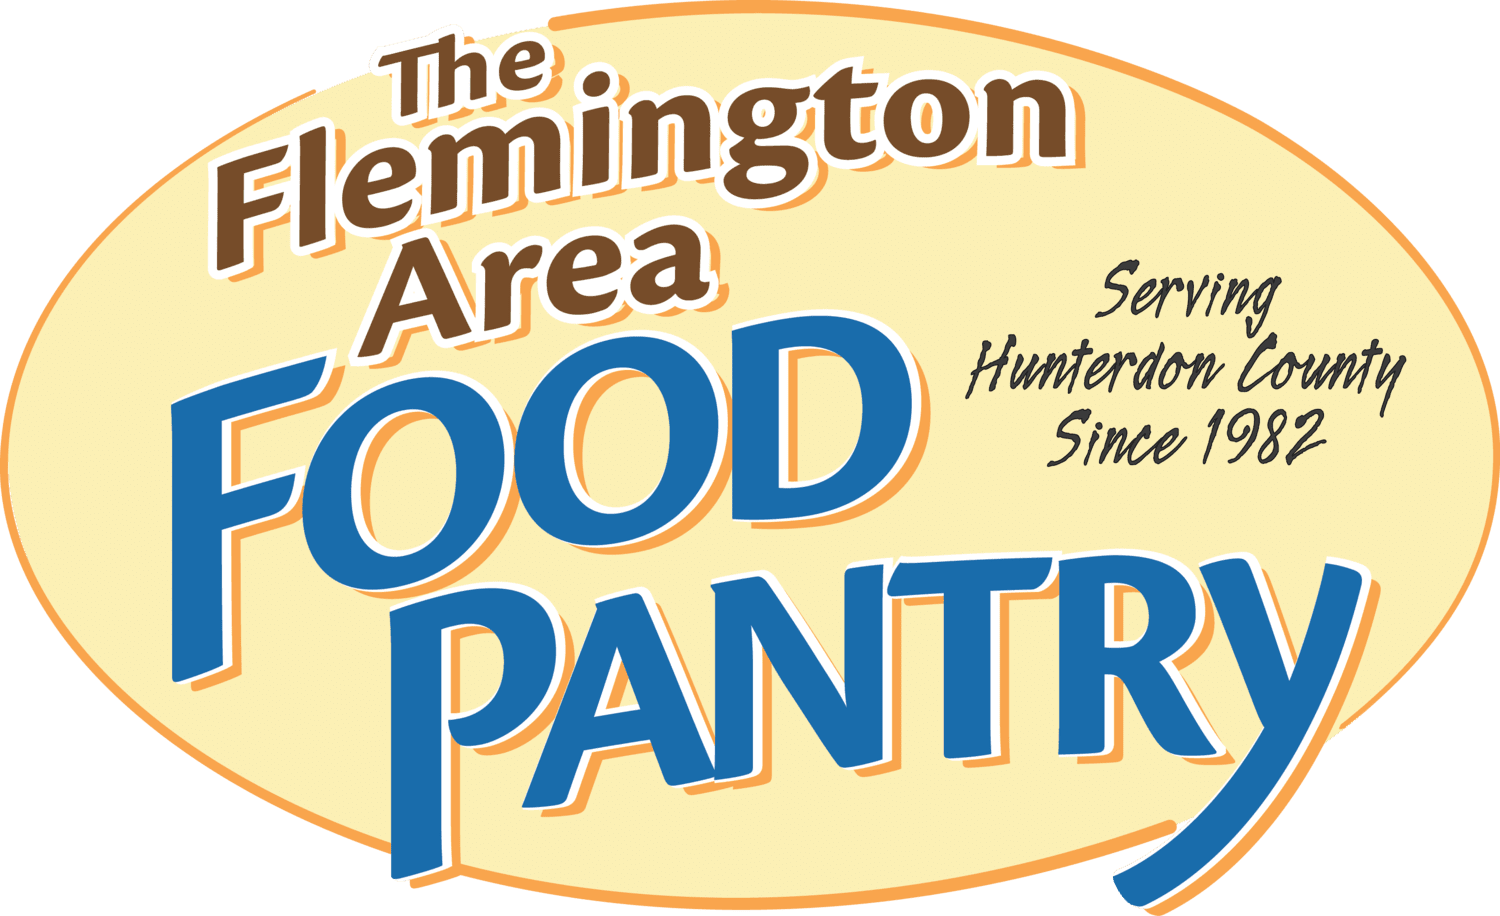 Flemington Food Pantry